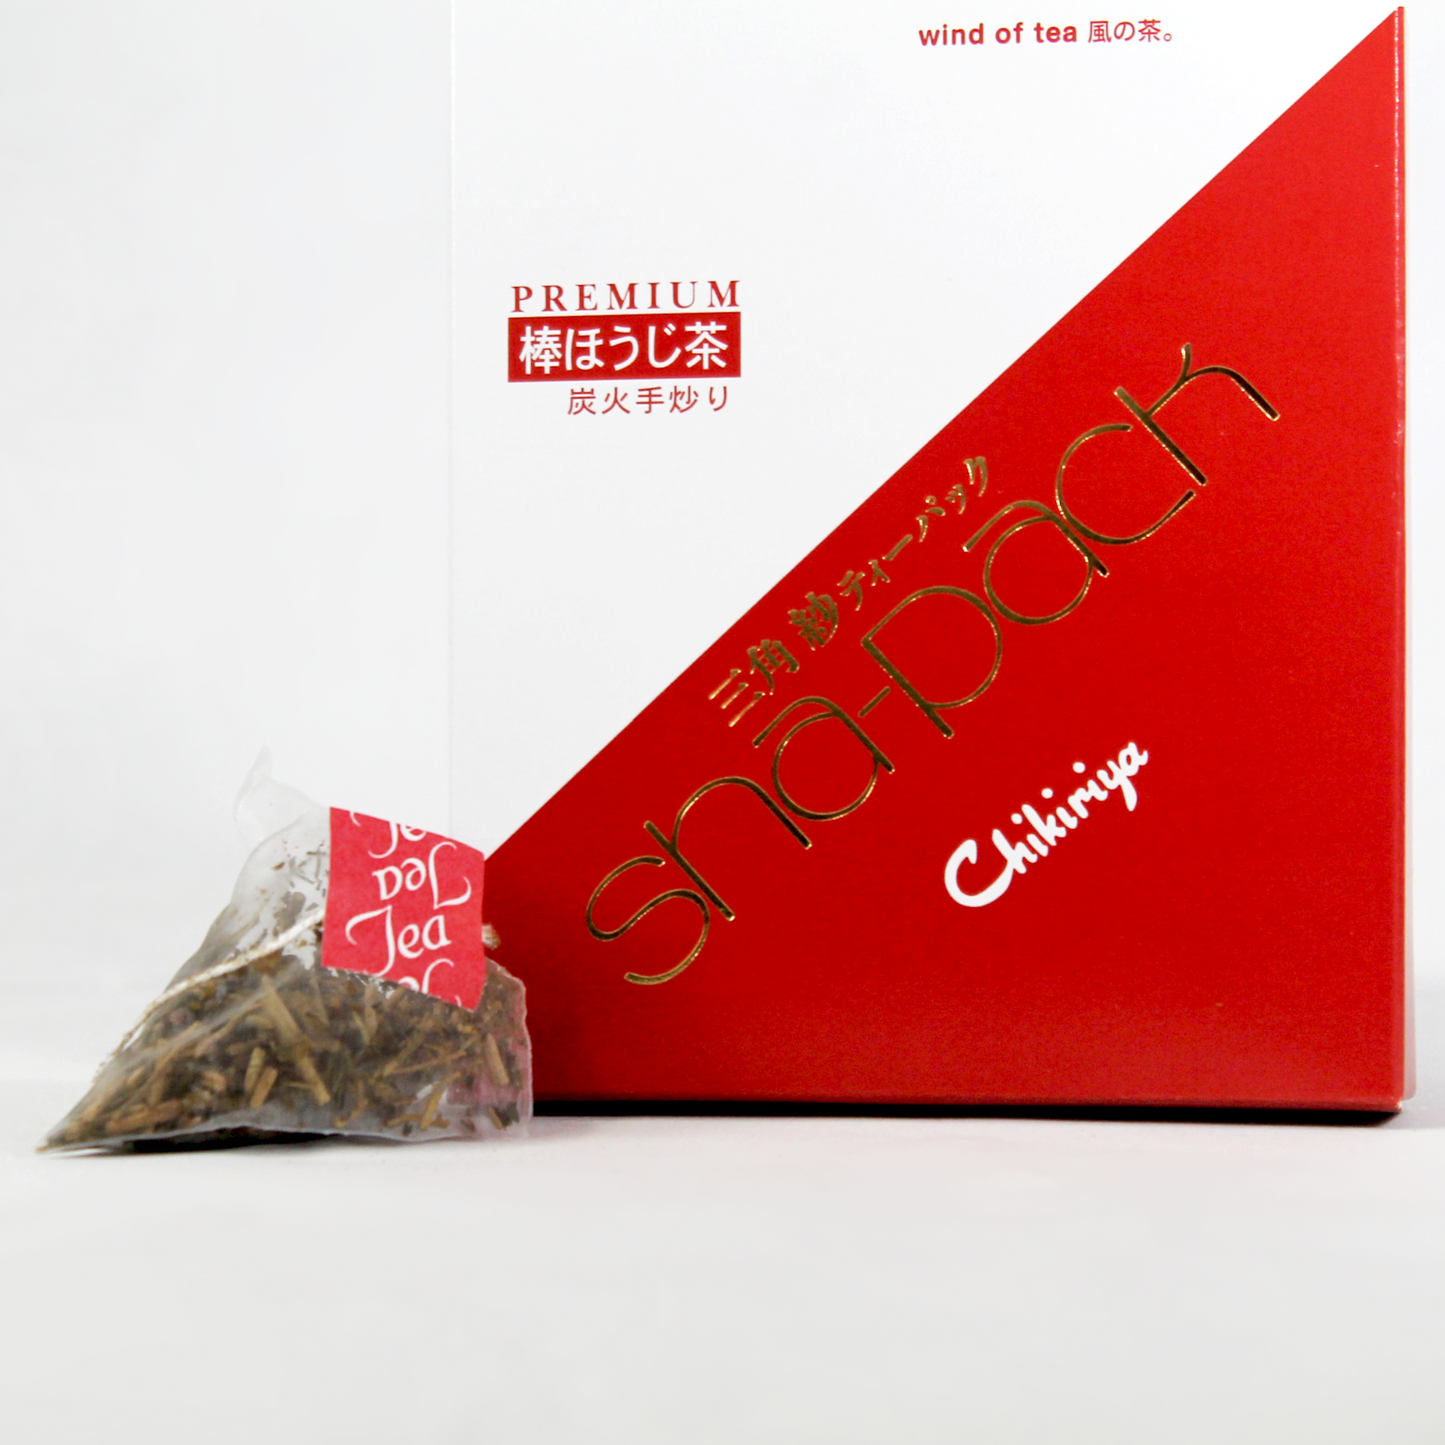 Premium Hojicha Rod (charcoal roasted by hand) - 2.5g x 12 Tea bags